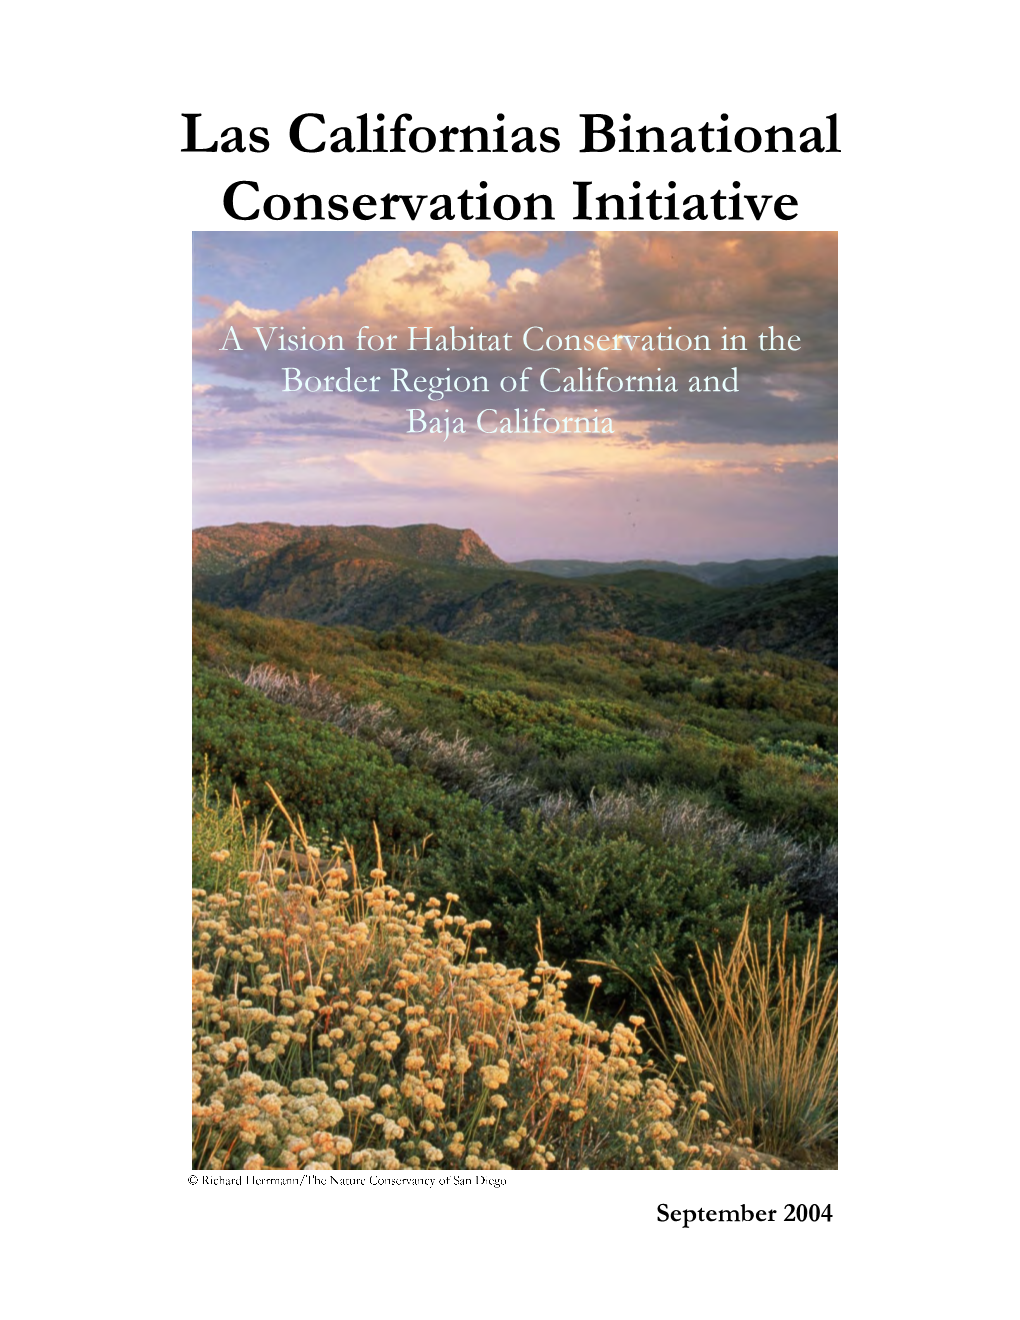 4. Las Californias Binational Conservation